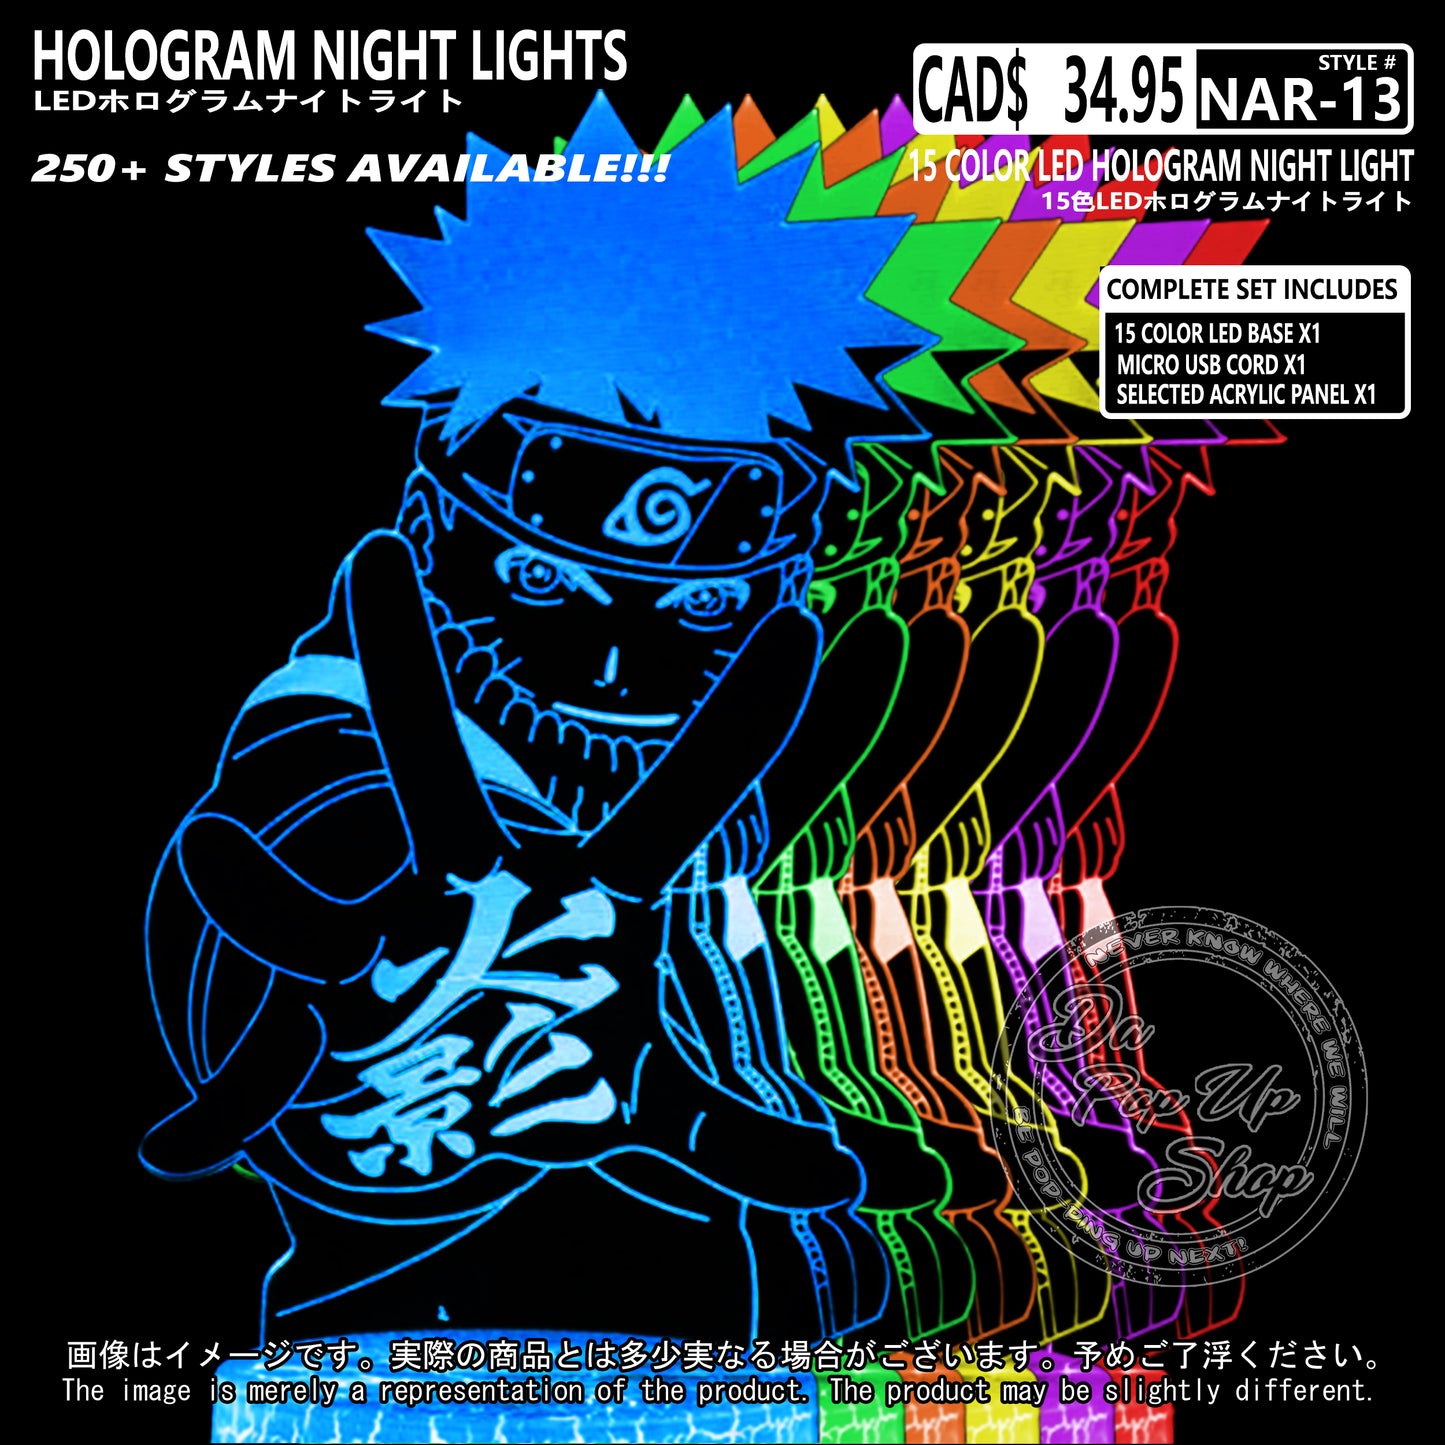 (NAR-13) Naruto Hologram LED Night Light